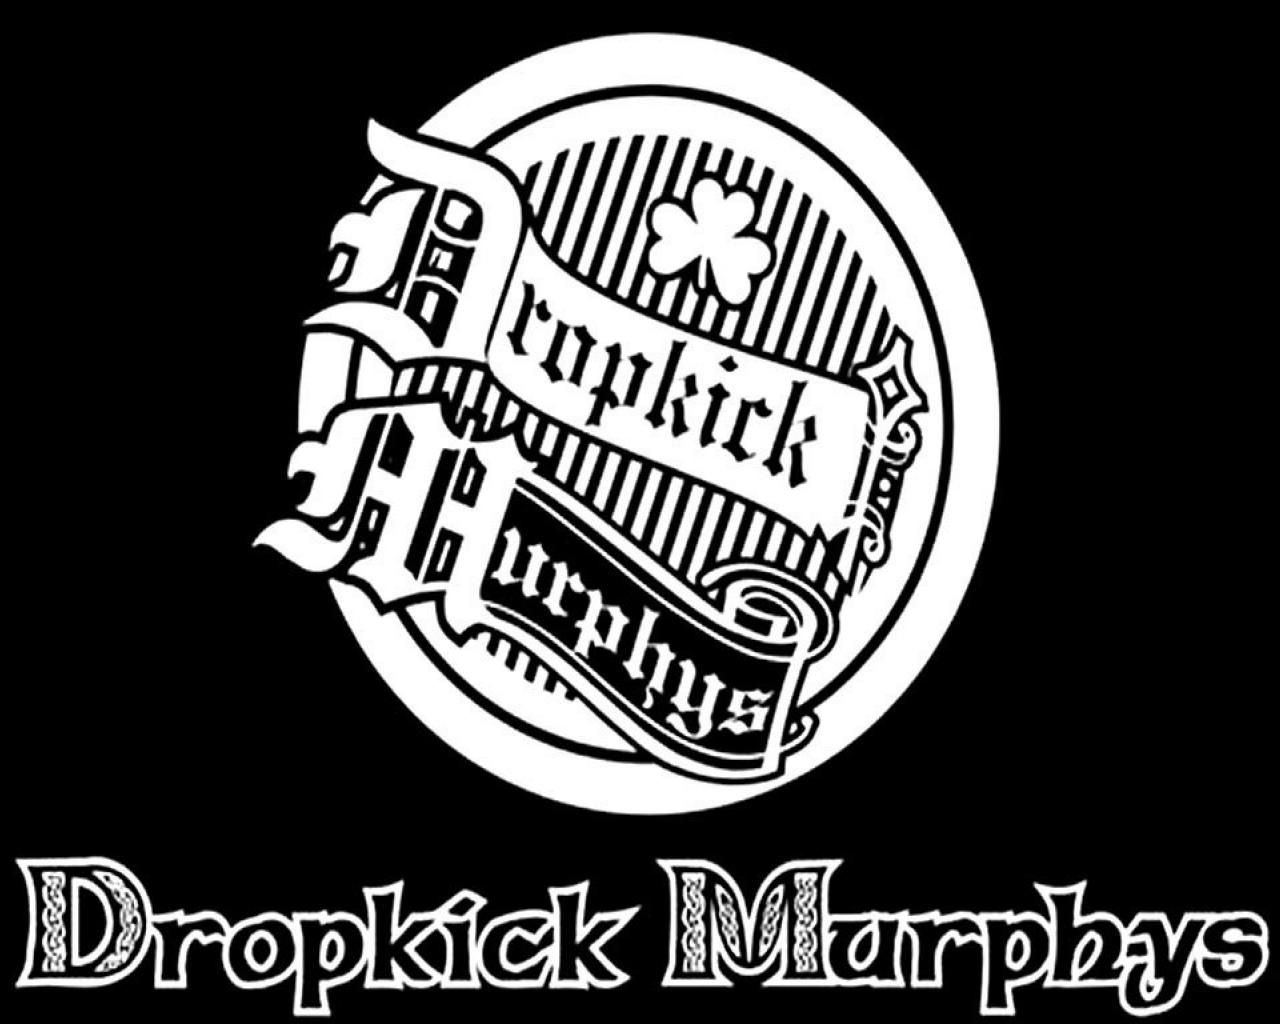 Dropkick murphys official hd wallpaper - - HQ Desktop